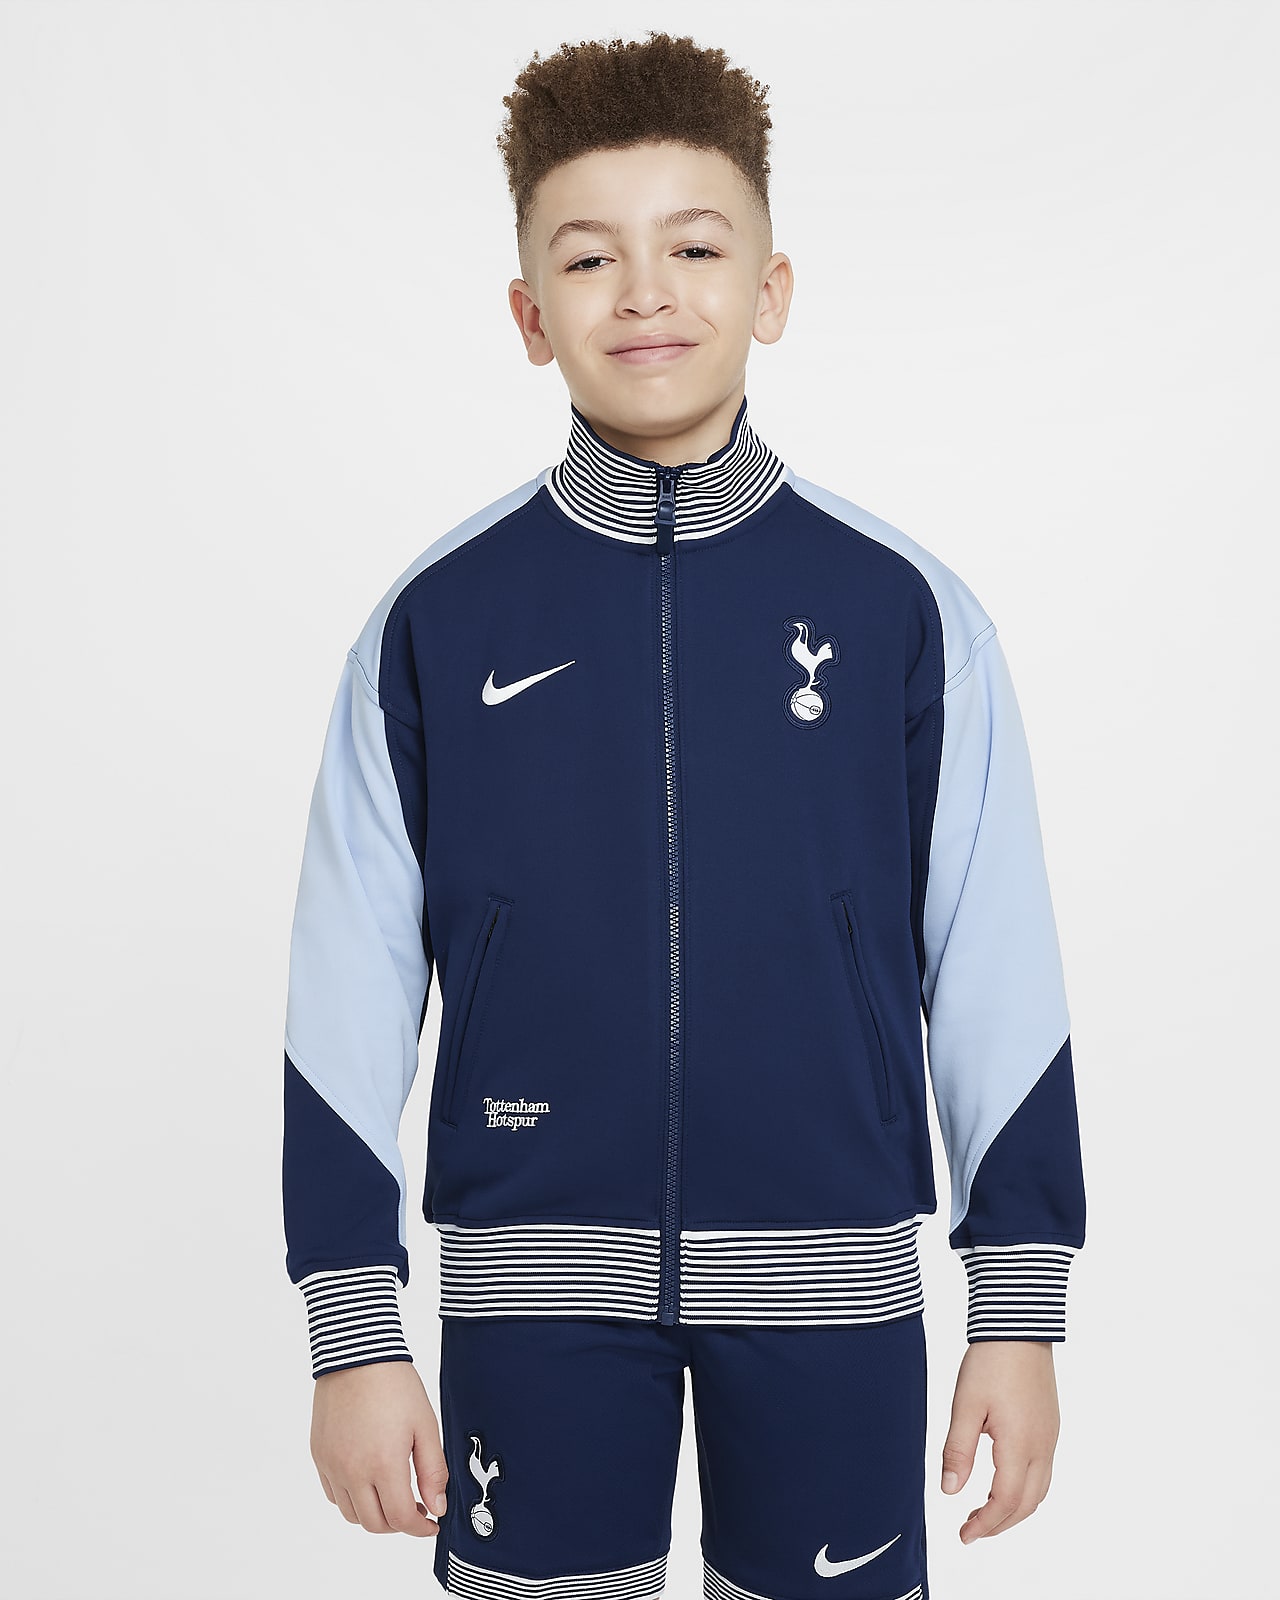 Tottenham Hotspur Academy Pro Older Kids' Nike Dri-FIT Football Jacket